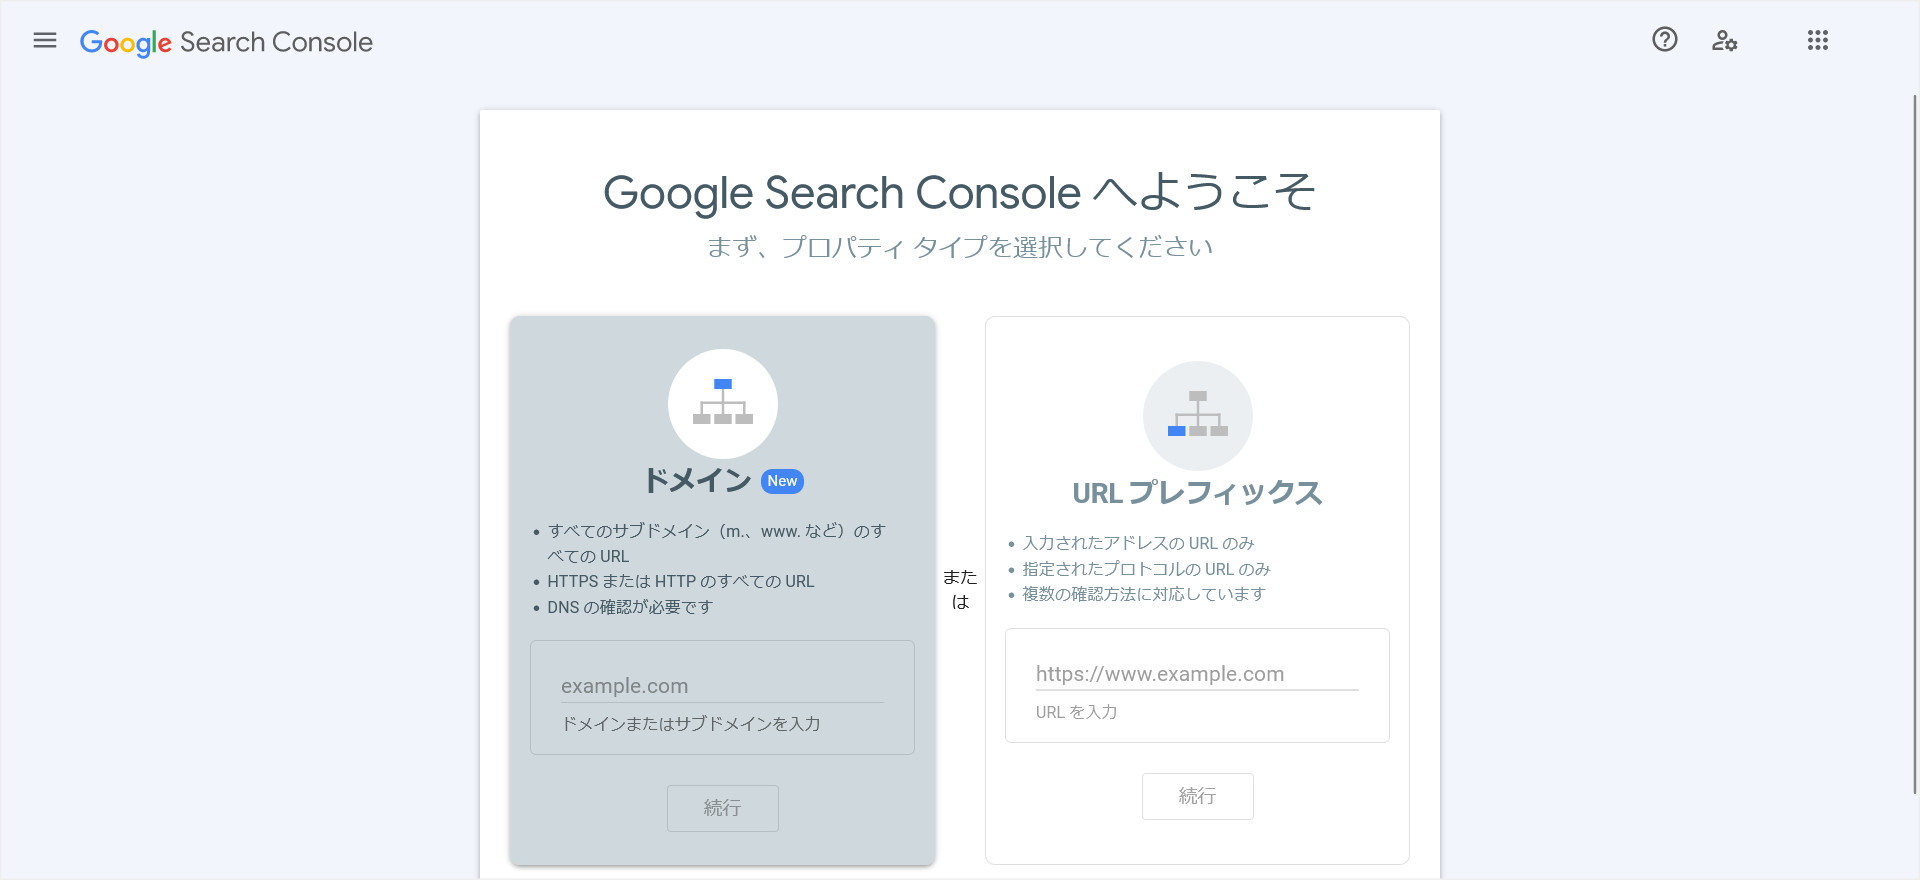 「Google Search Console」の設定画面